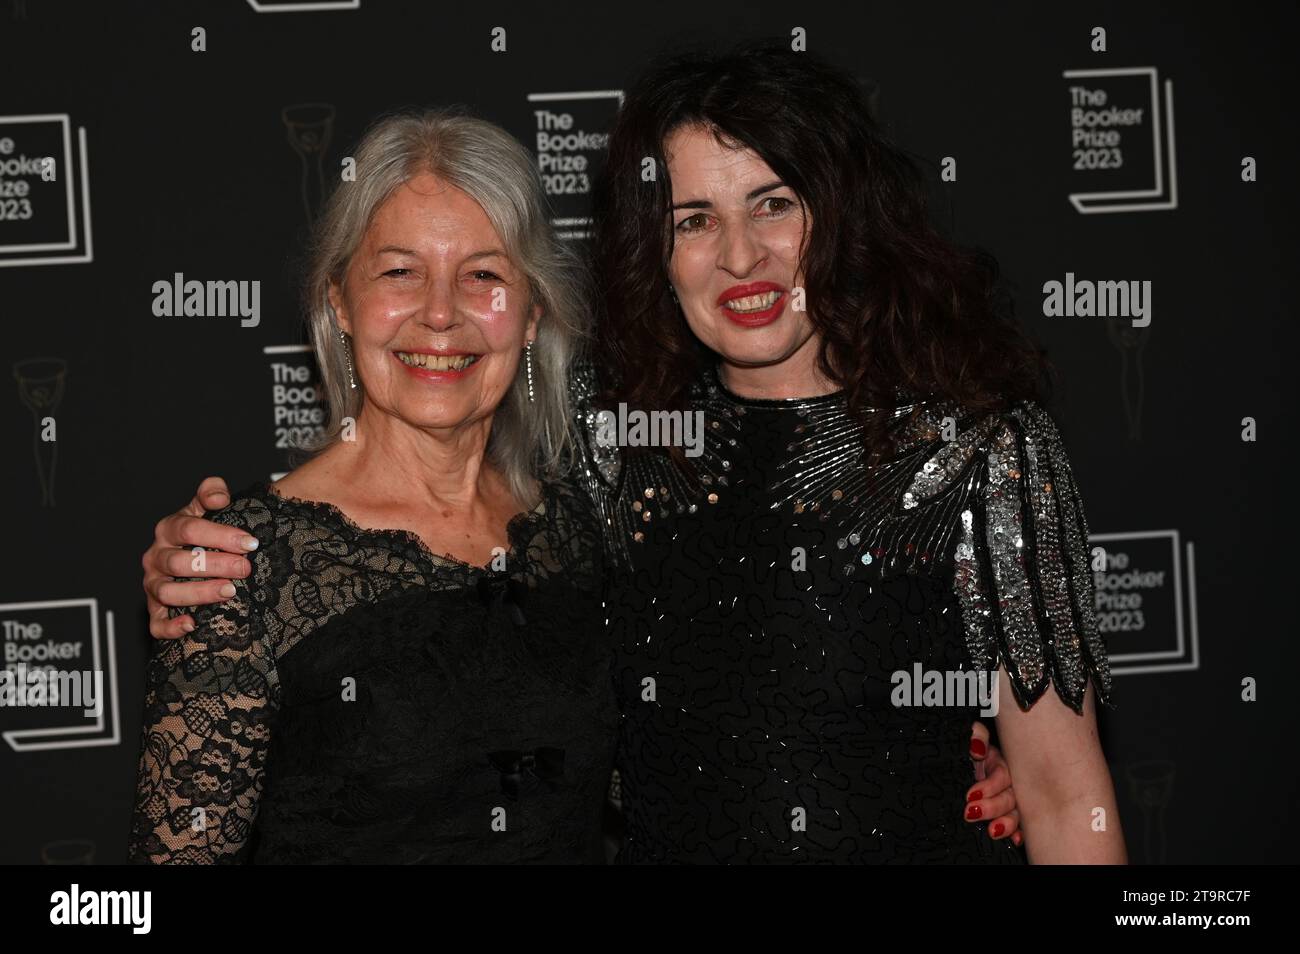 London, Großbritannien. November 2023. Susan Lynch (R) nimmt an der Gewinnerzeremonie des Booker Prize 2023 im Old Billingsgate, London, Teil. Quelle: Siehe Li/Picture Capital/Alamy Live News Stockfoto